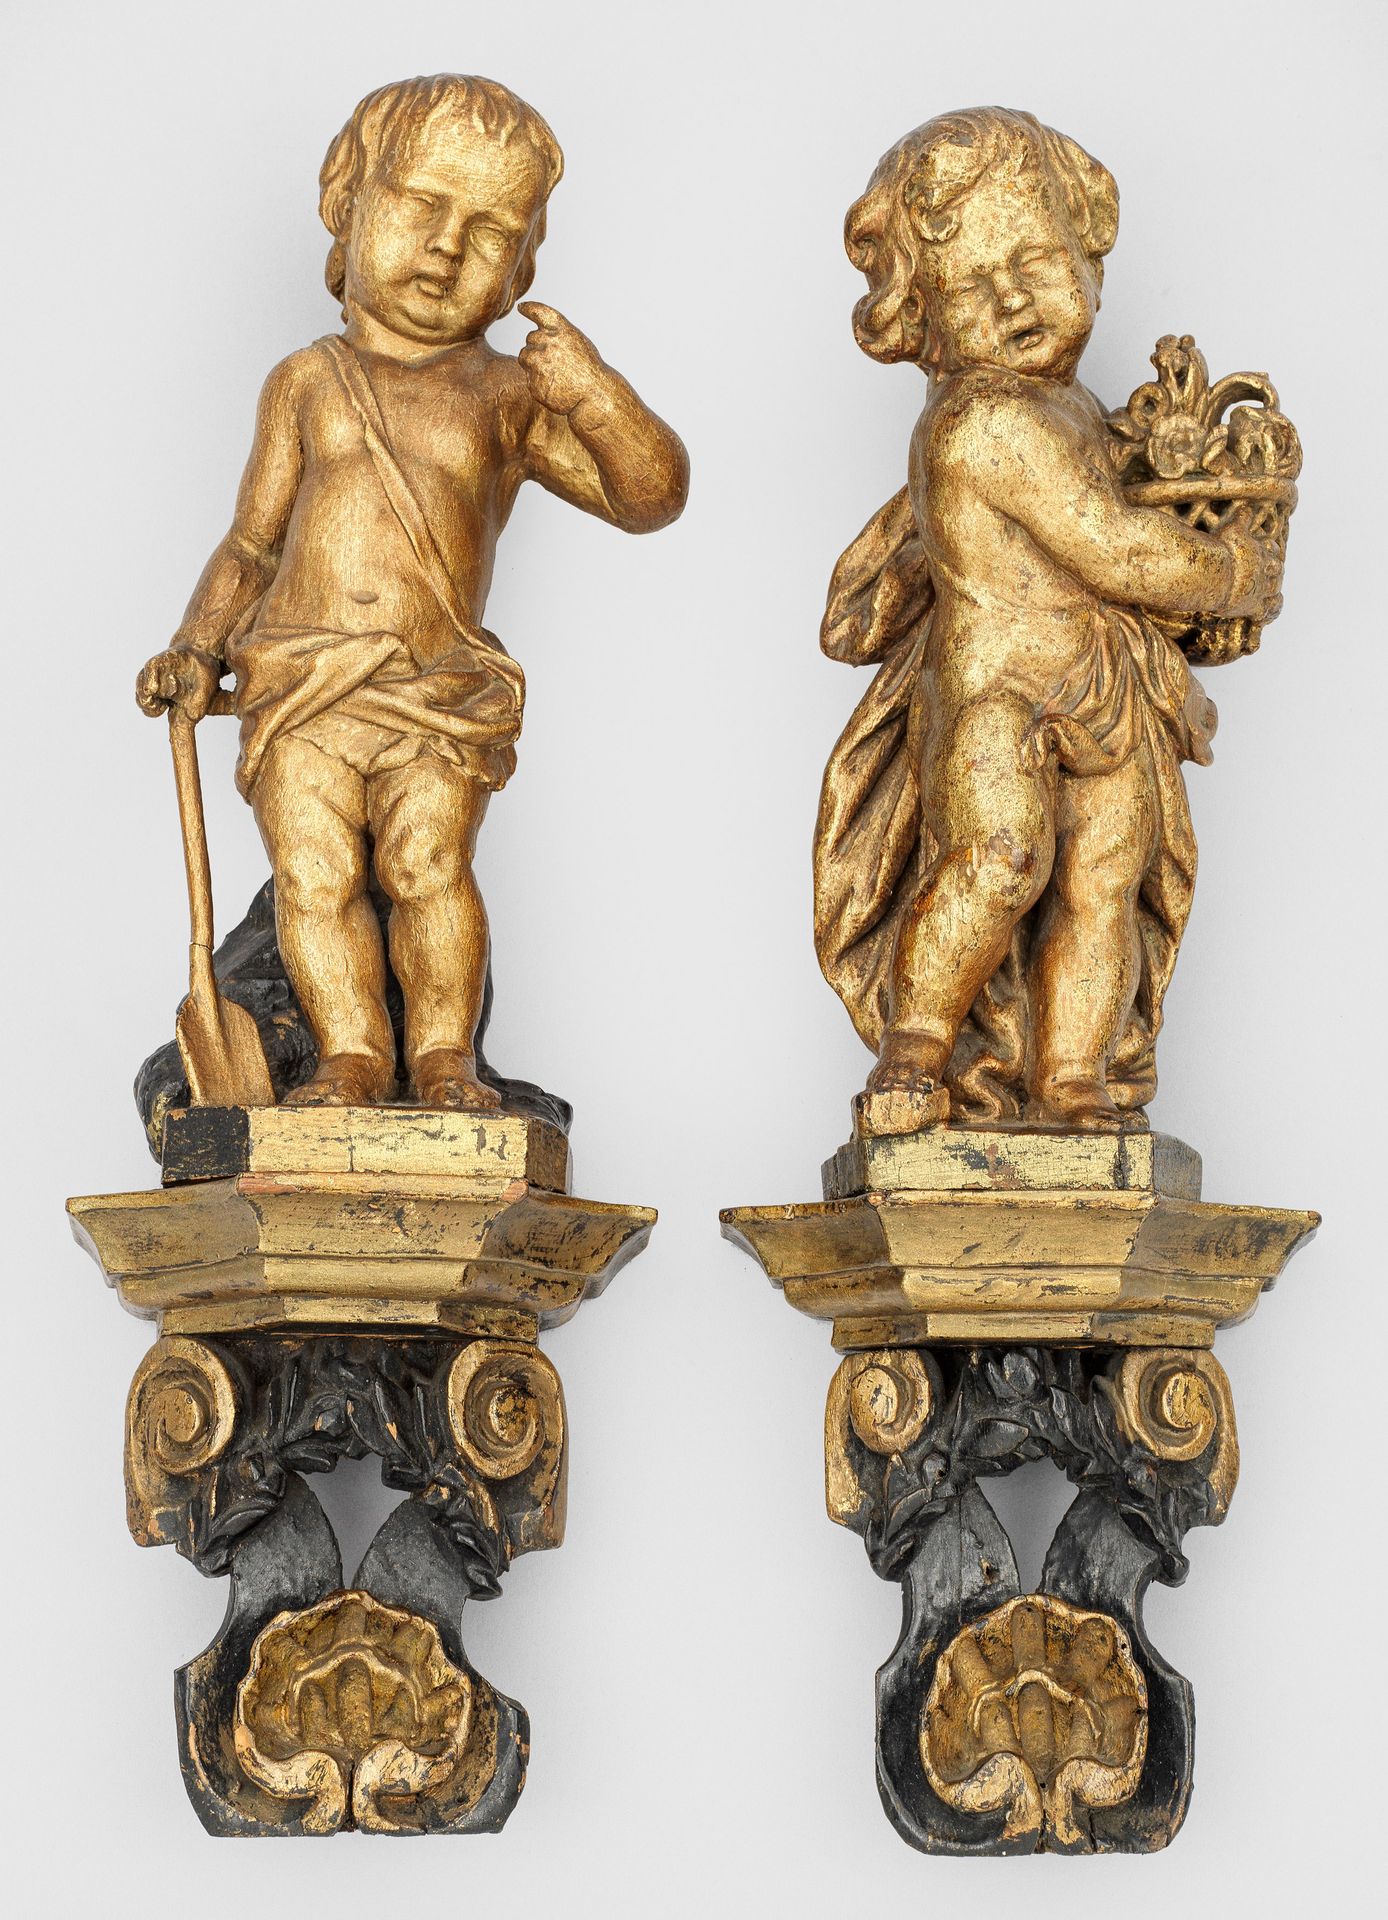 Null 德国雕塑家（活跃于 18 世纪）
一对园丁雕像
对偶。雕刻的木头；油漆已被转移。 站在倾斜的基座上，雕刻完整的莆蒂手持铲子和花篮。对称的弧形底座上浮雕&hellip;